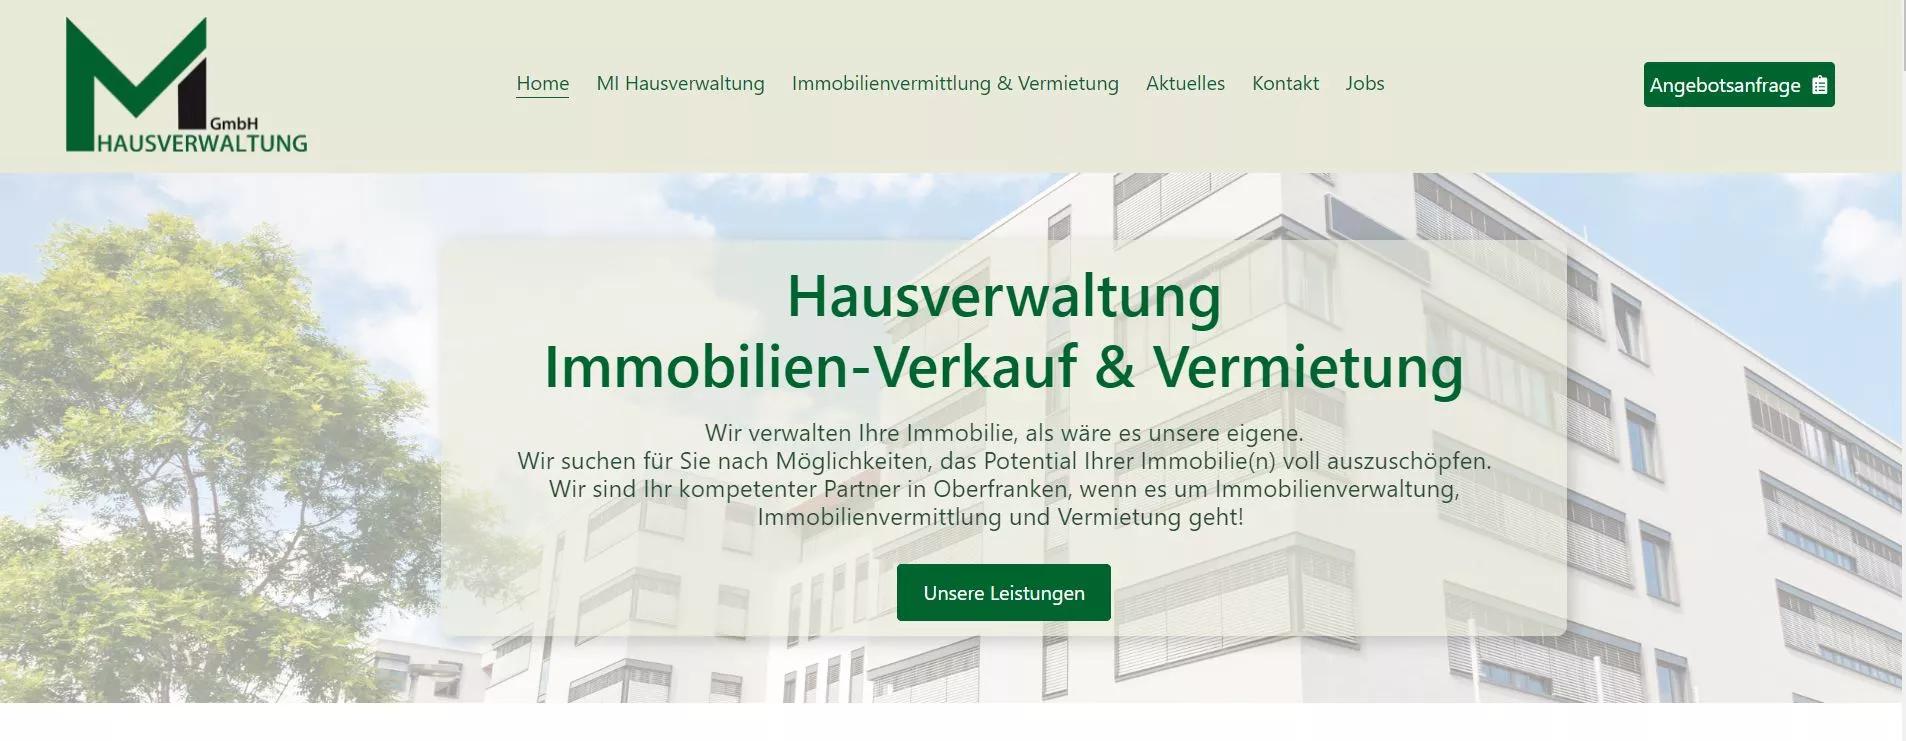 MI Hausverwaltung GmbH